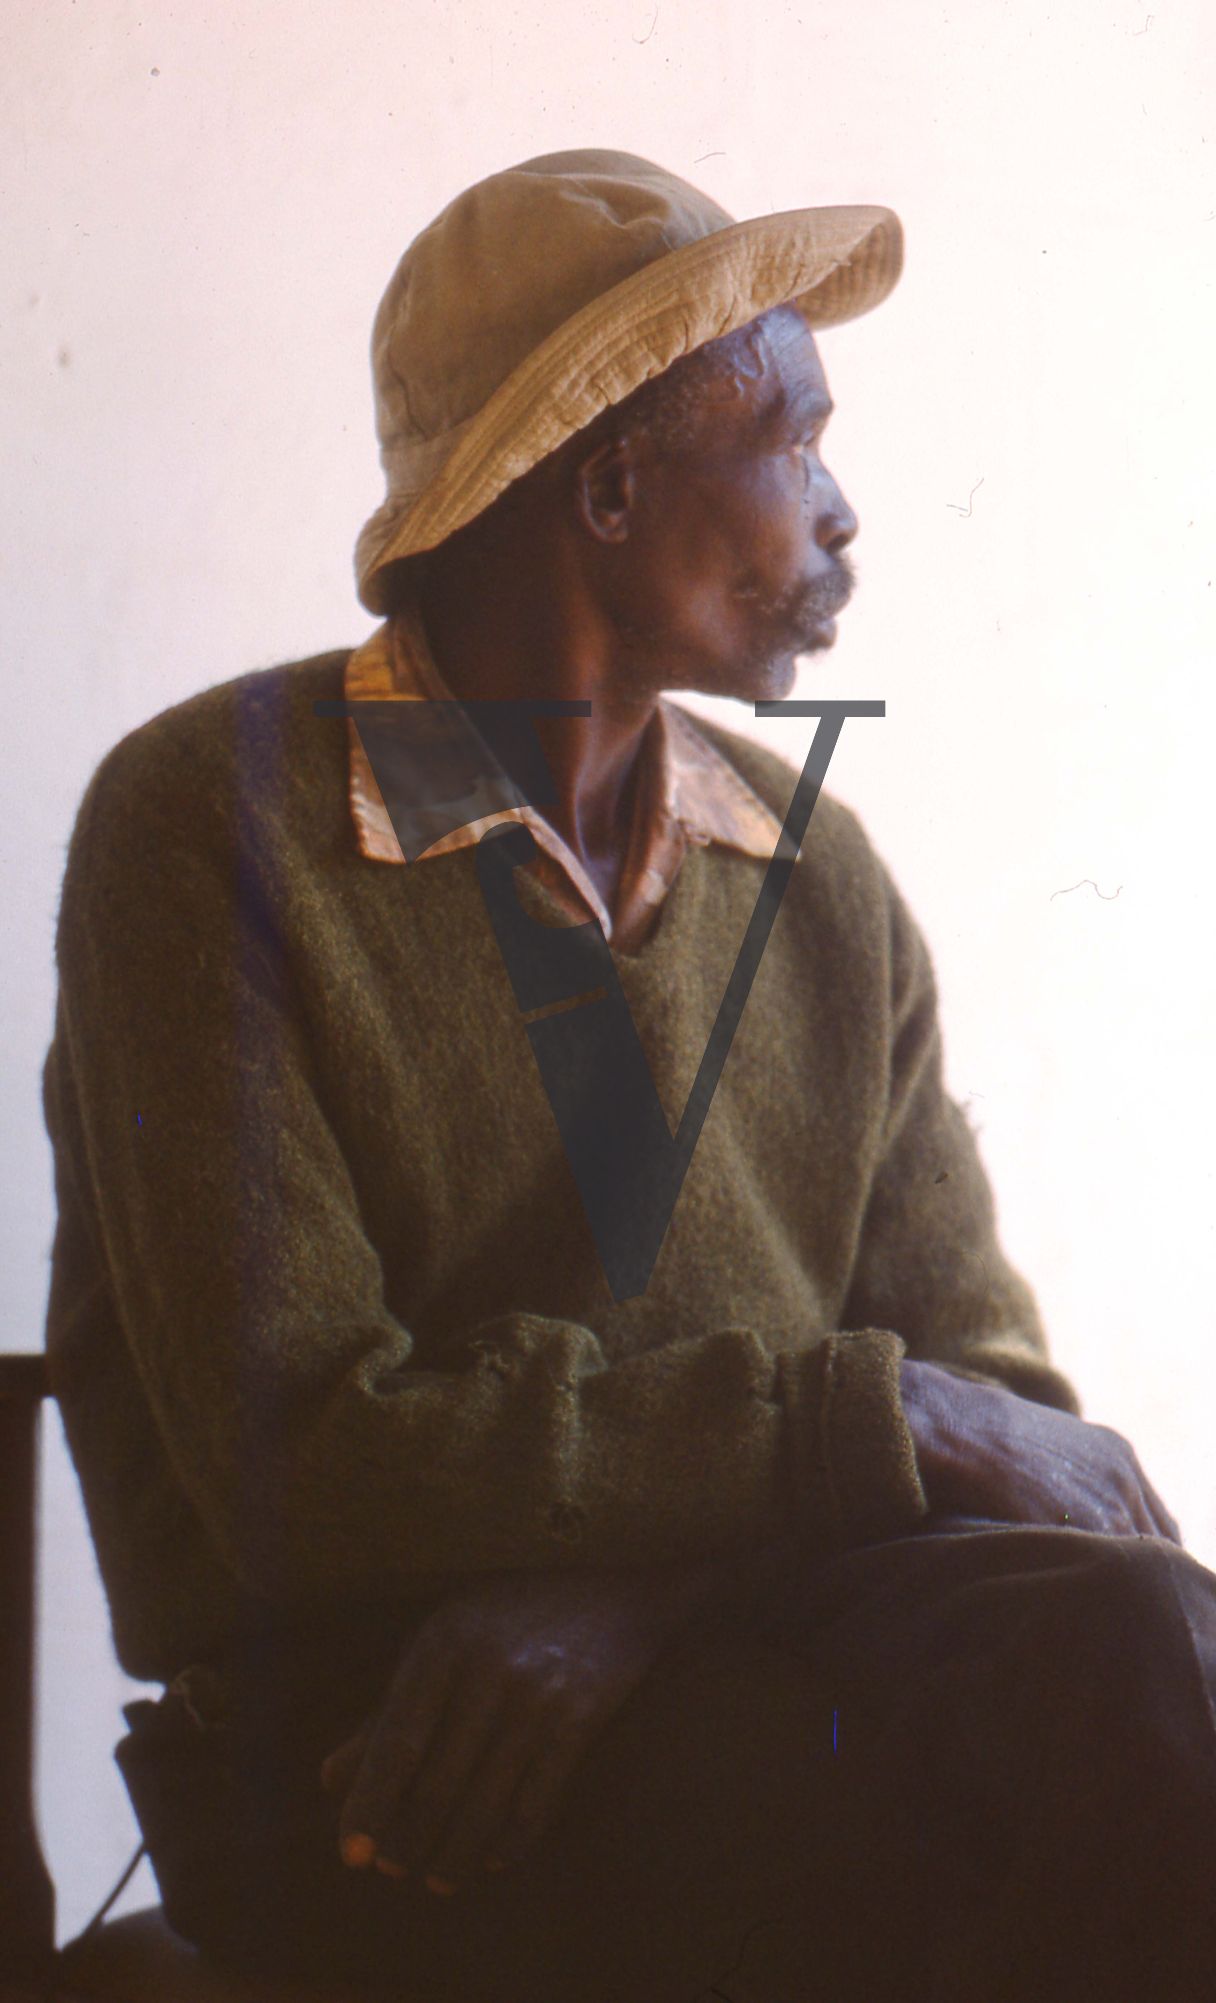 Lanford Ganyile, portrait.